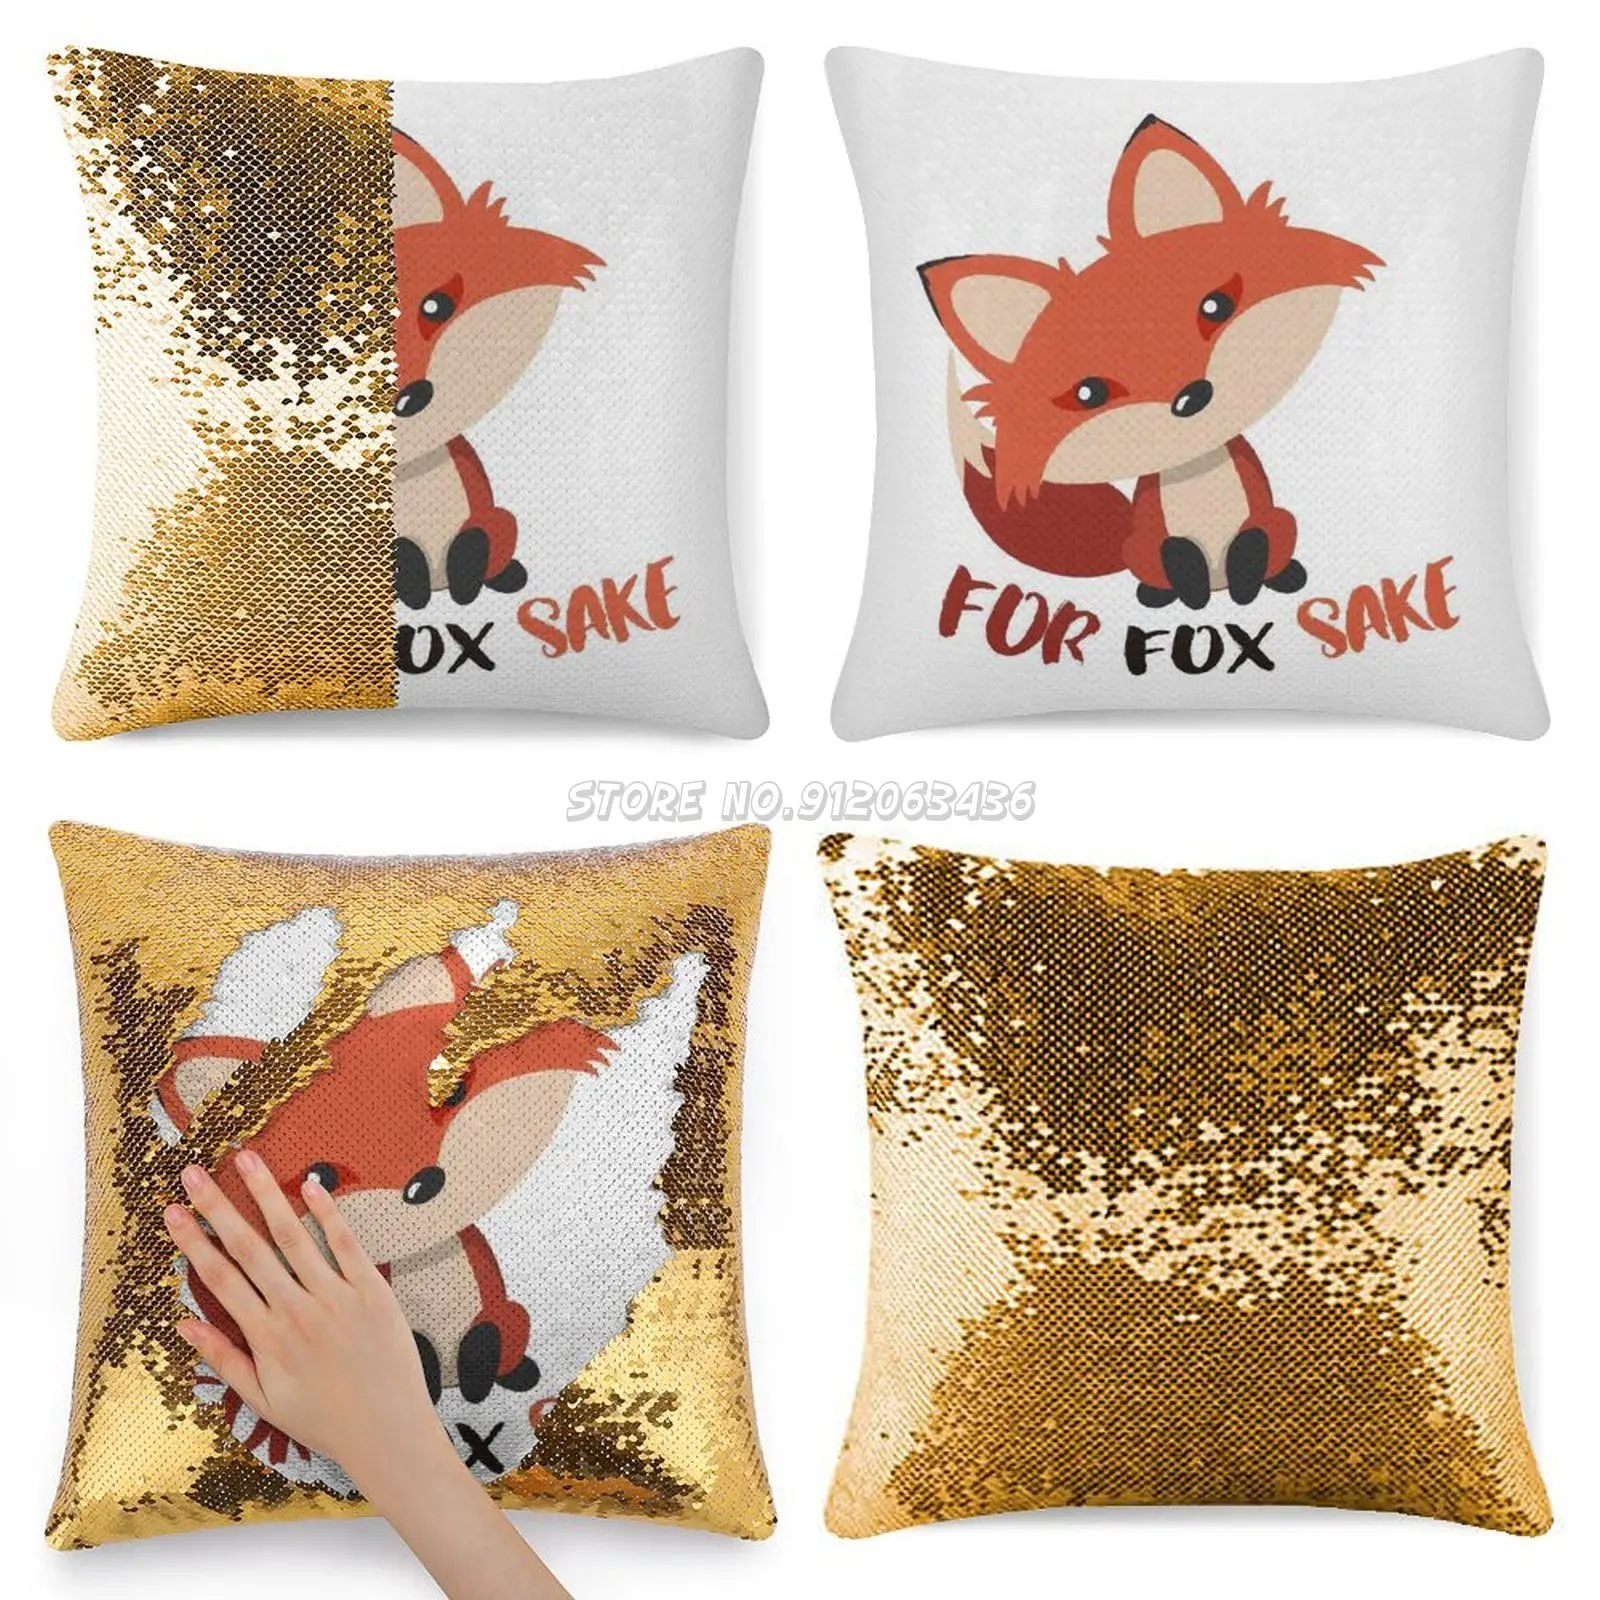 

For Fox Sake Sequin Pillowcase Magical Cushions Cover 40X40cm Mermaid Fox Adorable Funny Cute Animal Foxes Animals Foxy Nature